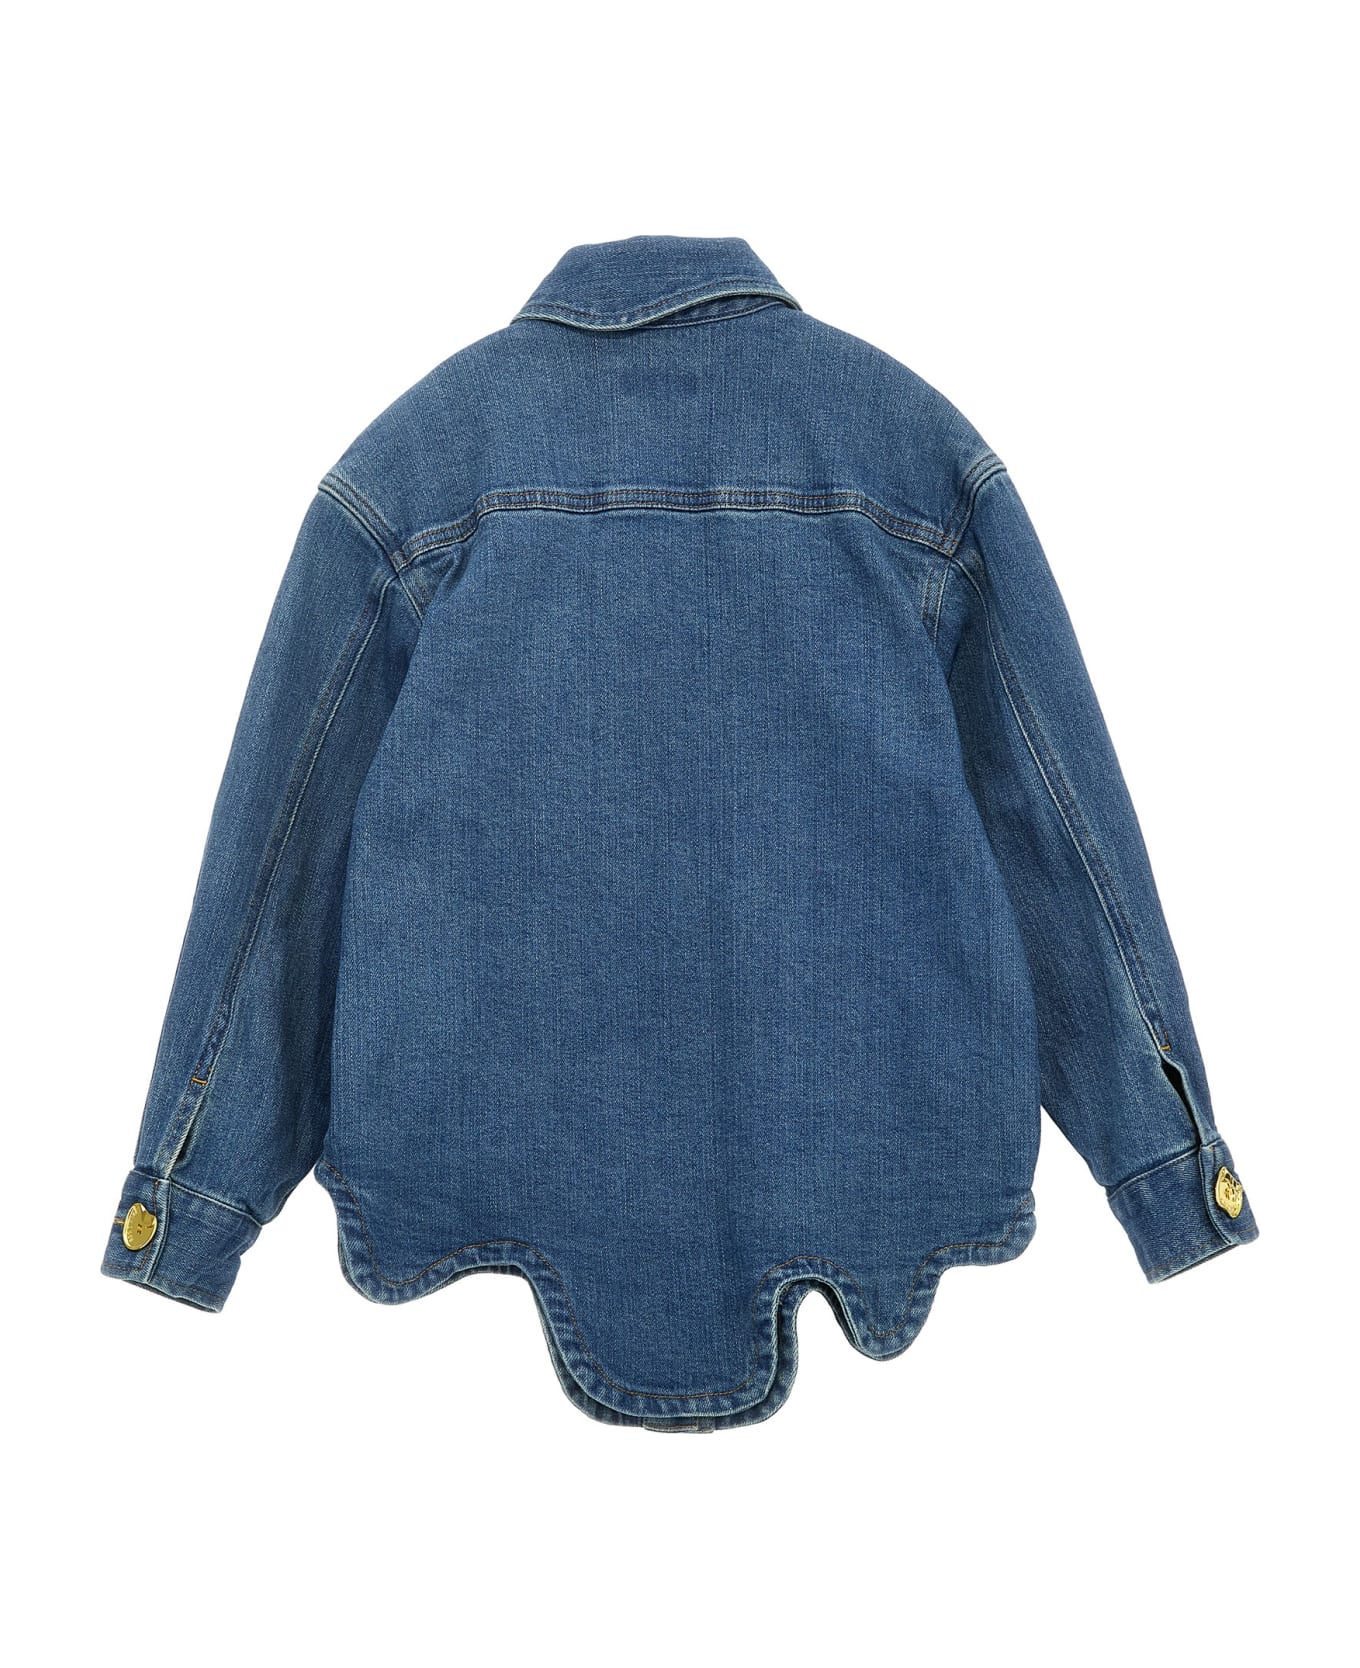 Moschino Button Detail Jacket - Blue